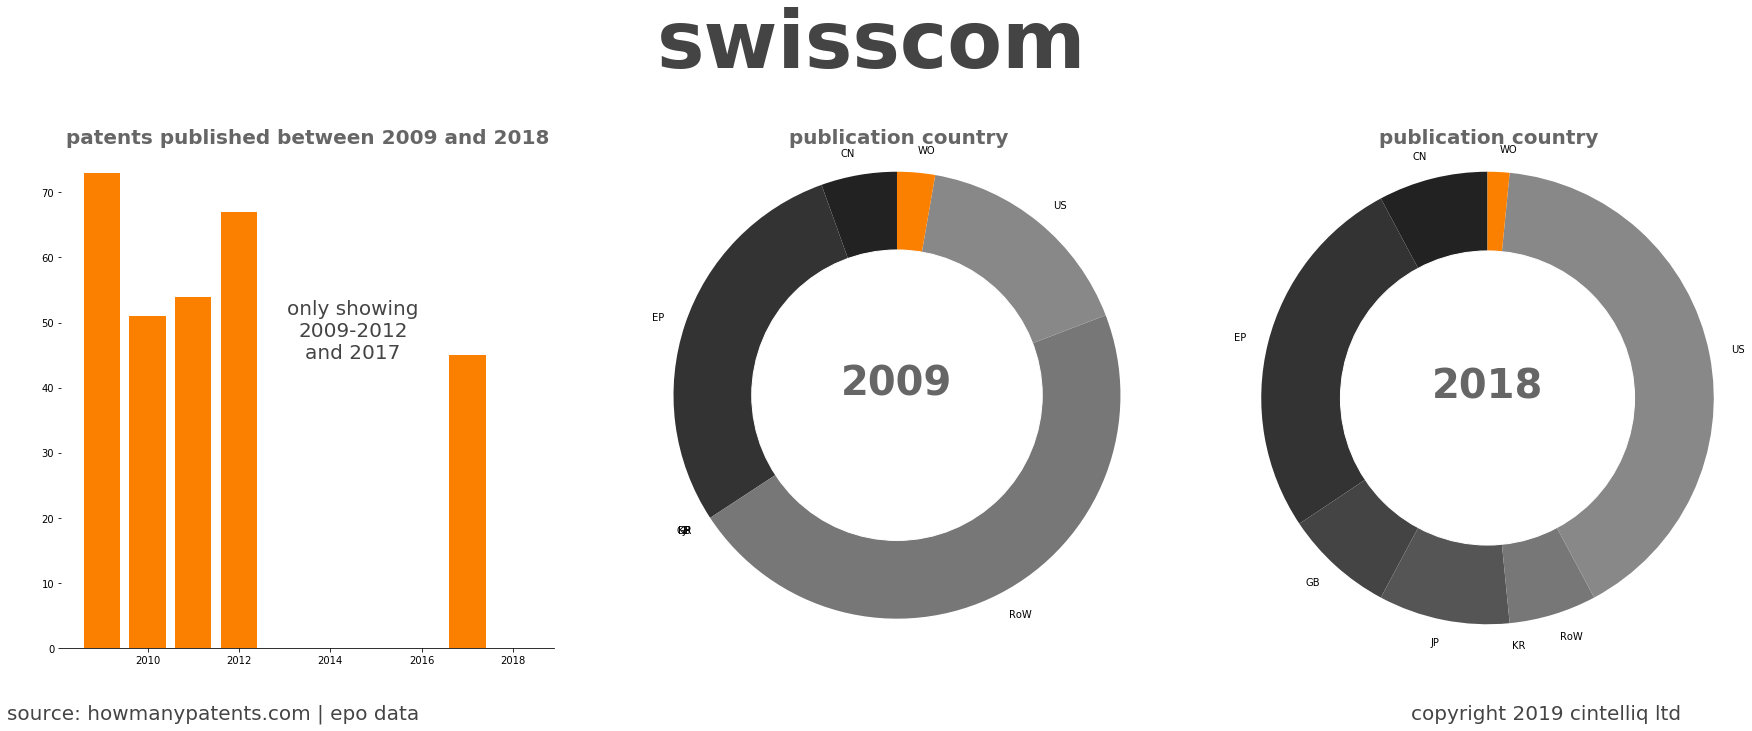 summary of patents for Swisscom